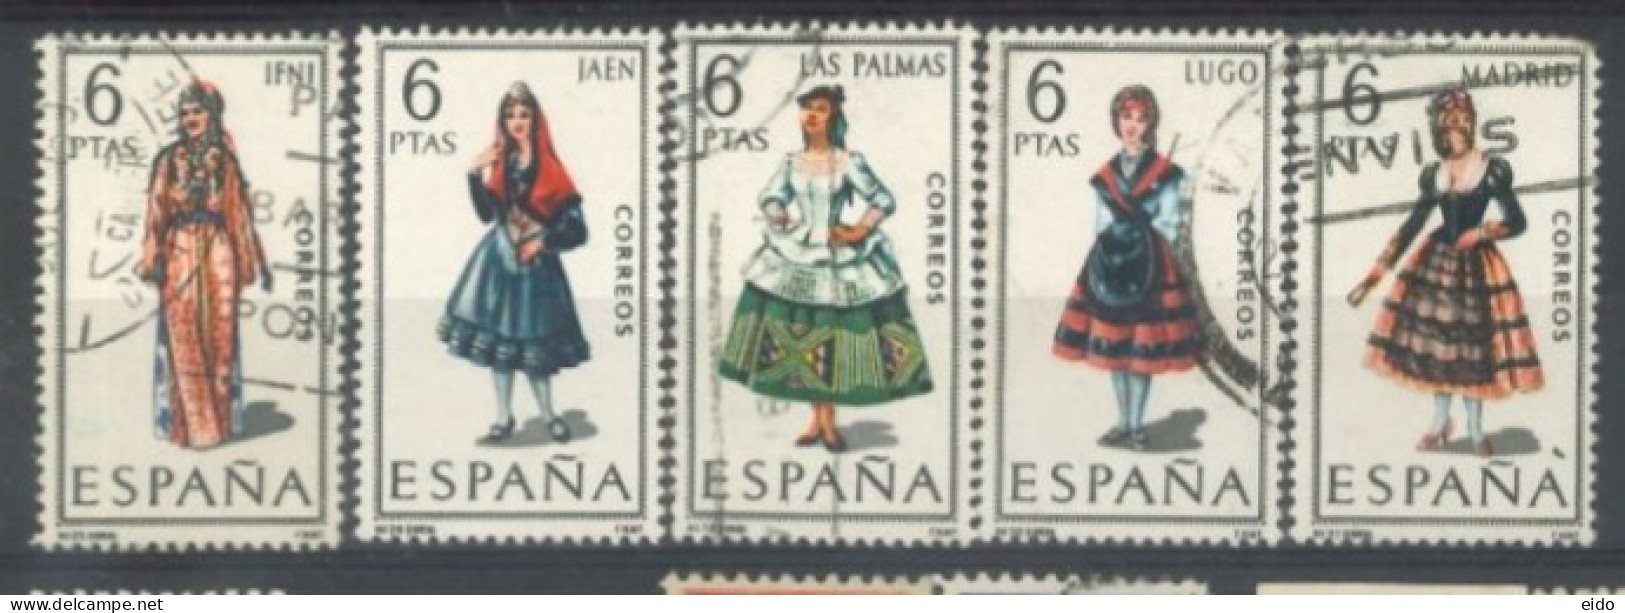 SPAIN, 1969, REGIONAL COSTUMES STAMPS SET OF 5, # 1416/17,1421/22/34, &1437, USED. - Usati